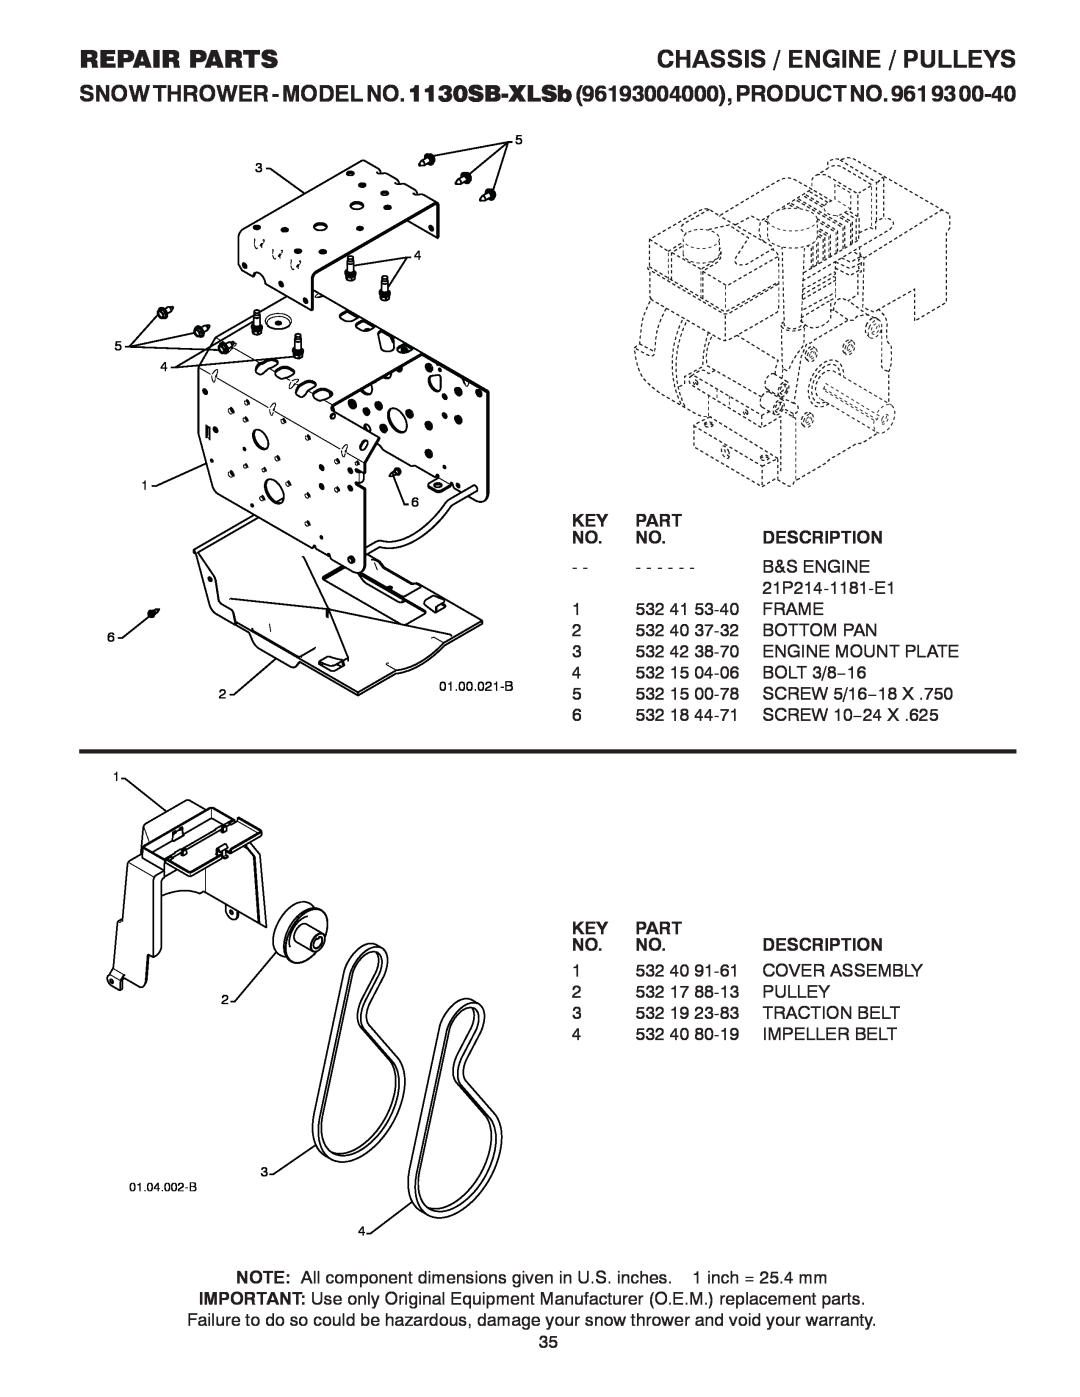 Husqvarna 1130SB-XLSB owner manual Chassis / Engine / Pulleys, Repair Parts, Description 